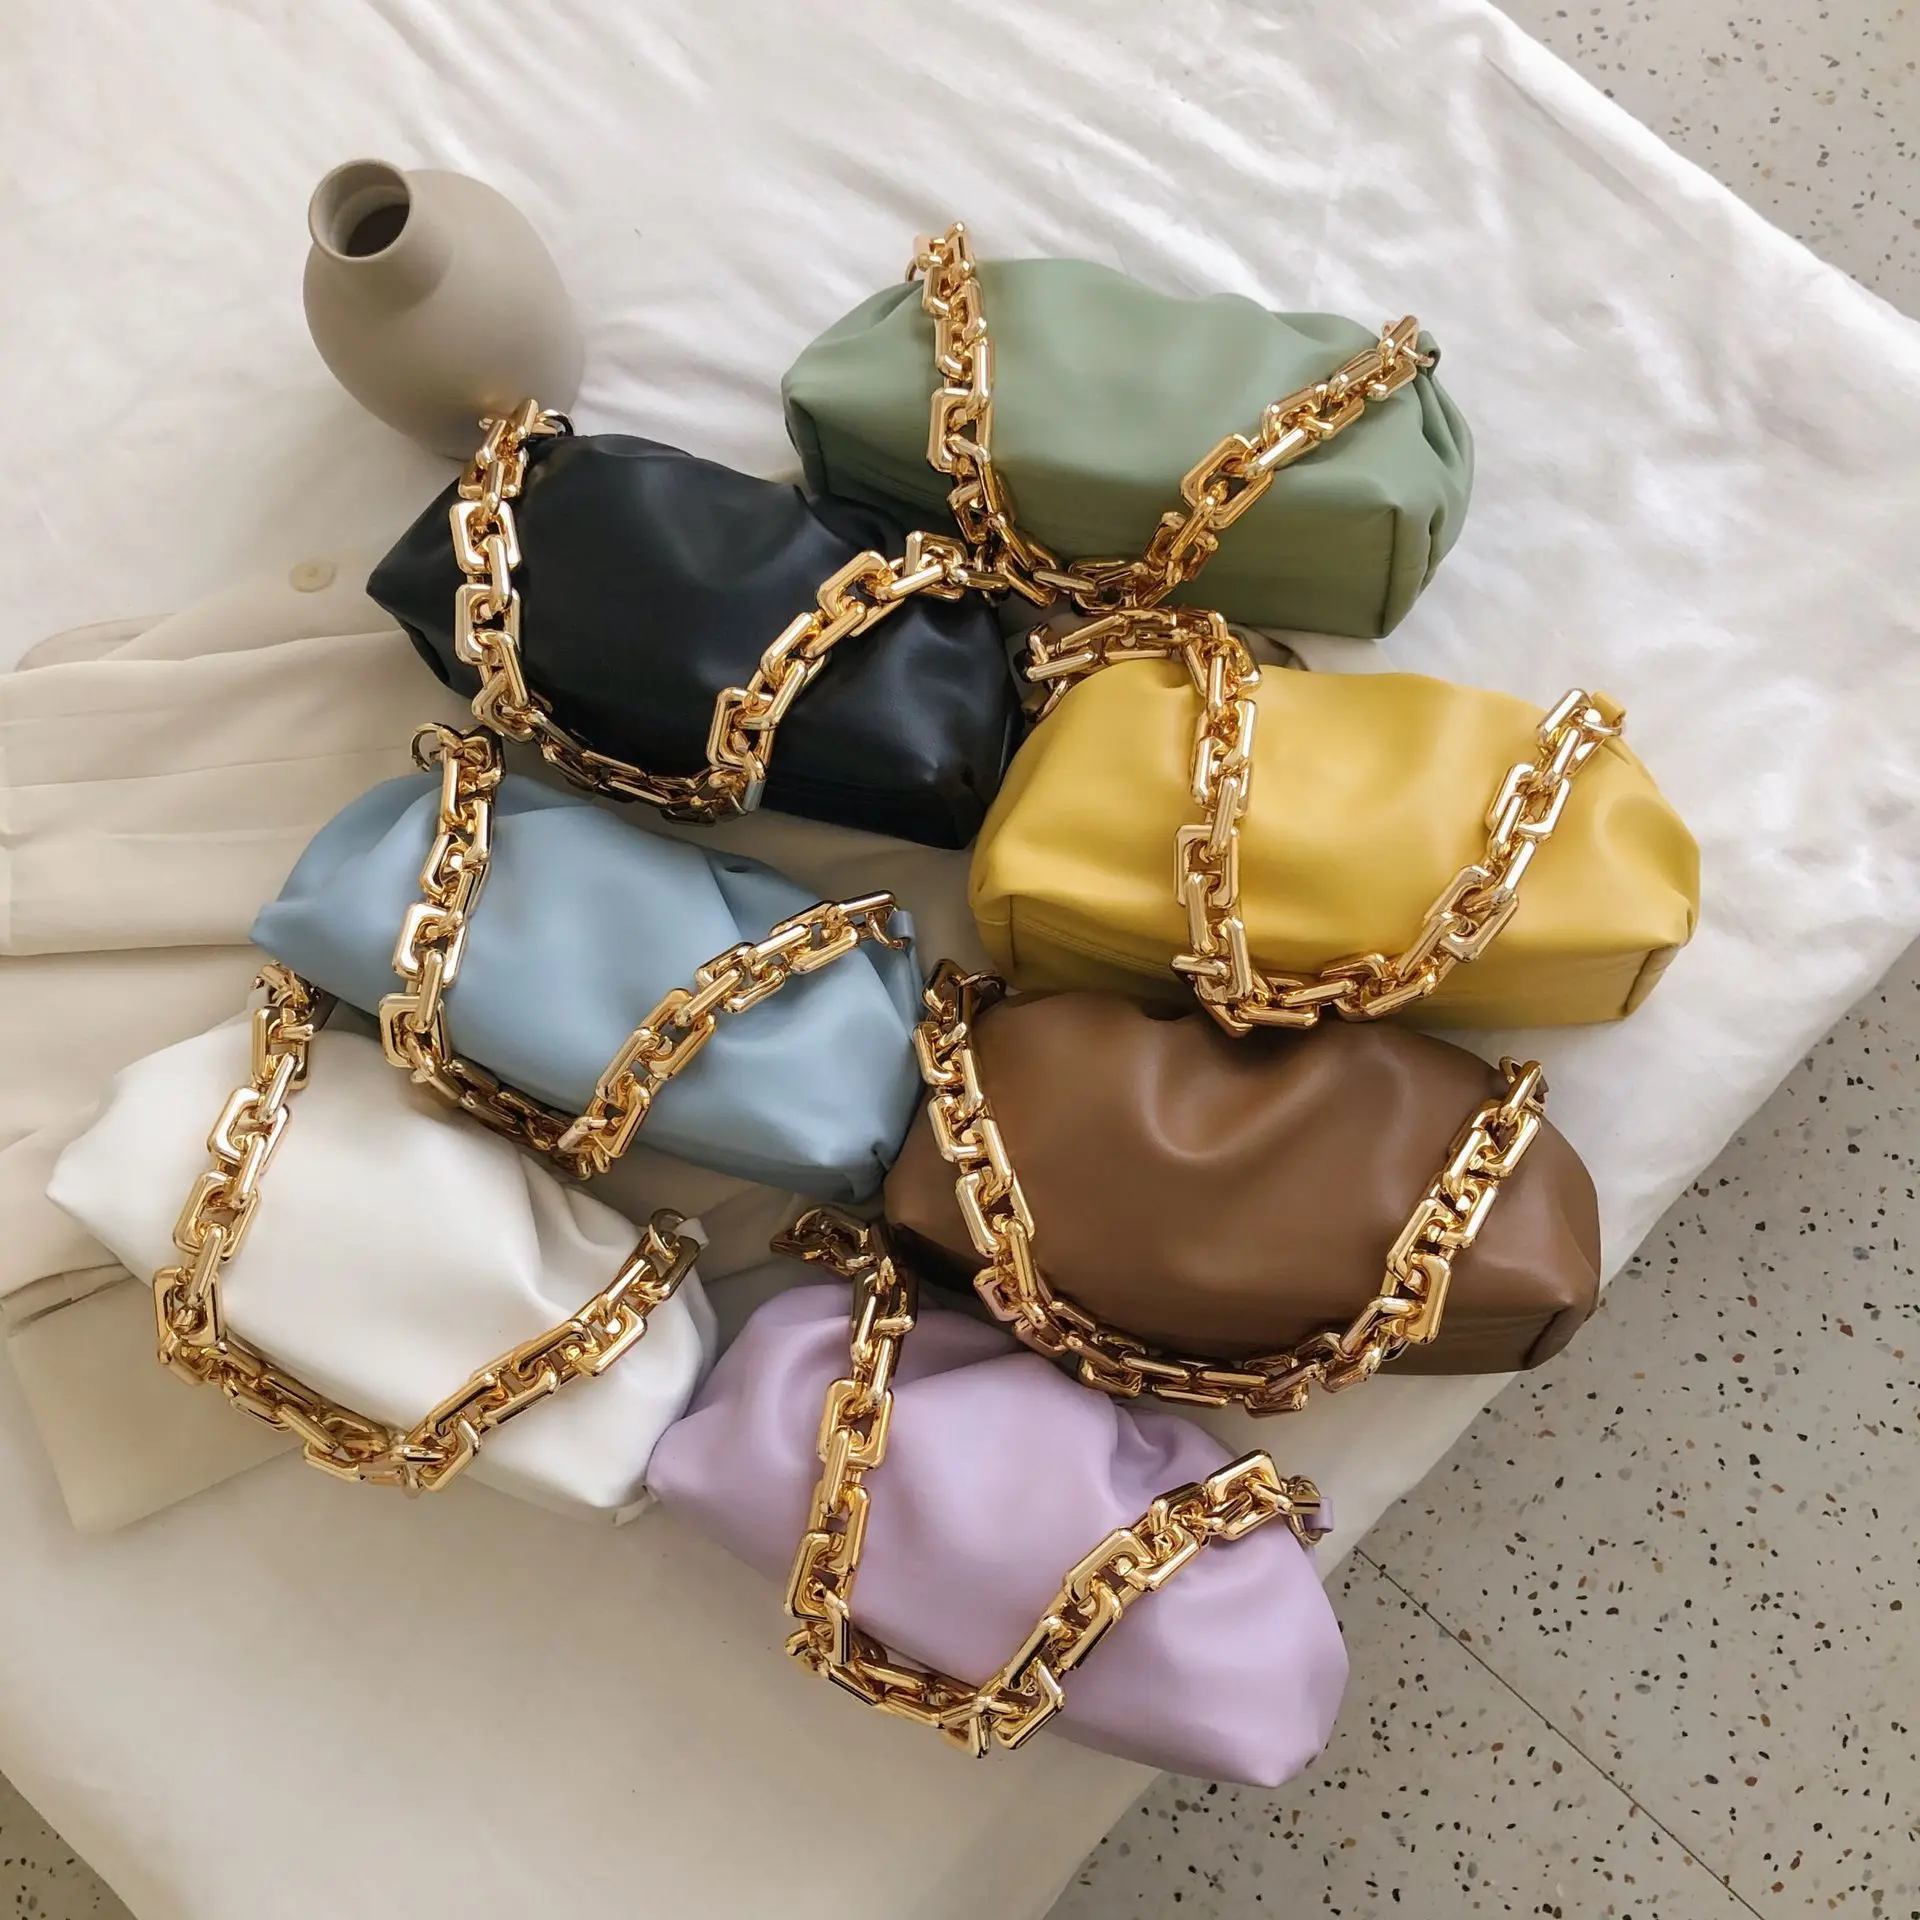 

JANHE sac a main femme carteras mujer bolso Pu Leather Small Crossbody Bag ladies Chain Hand Bag Women Purse And Handbags, 6 colours